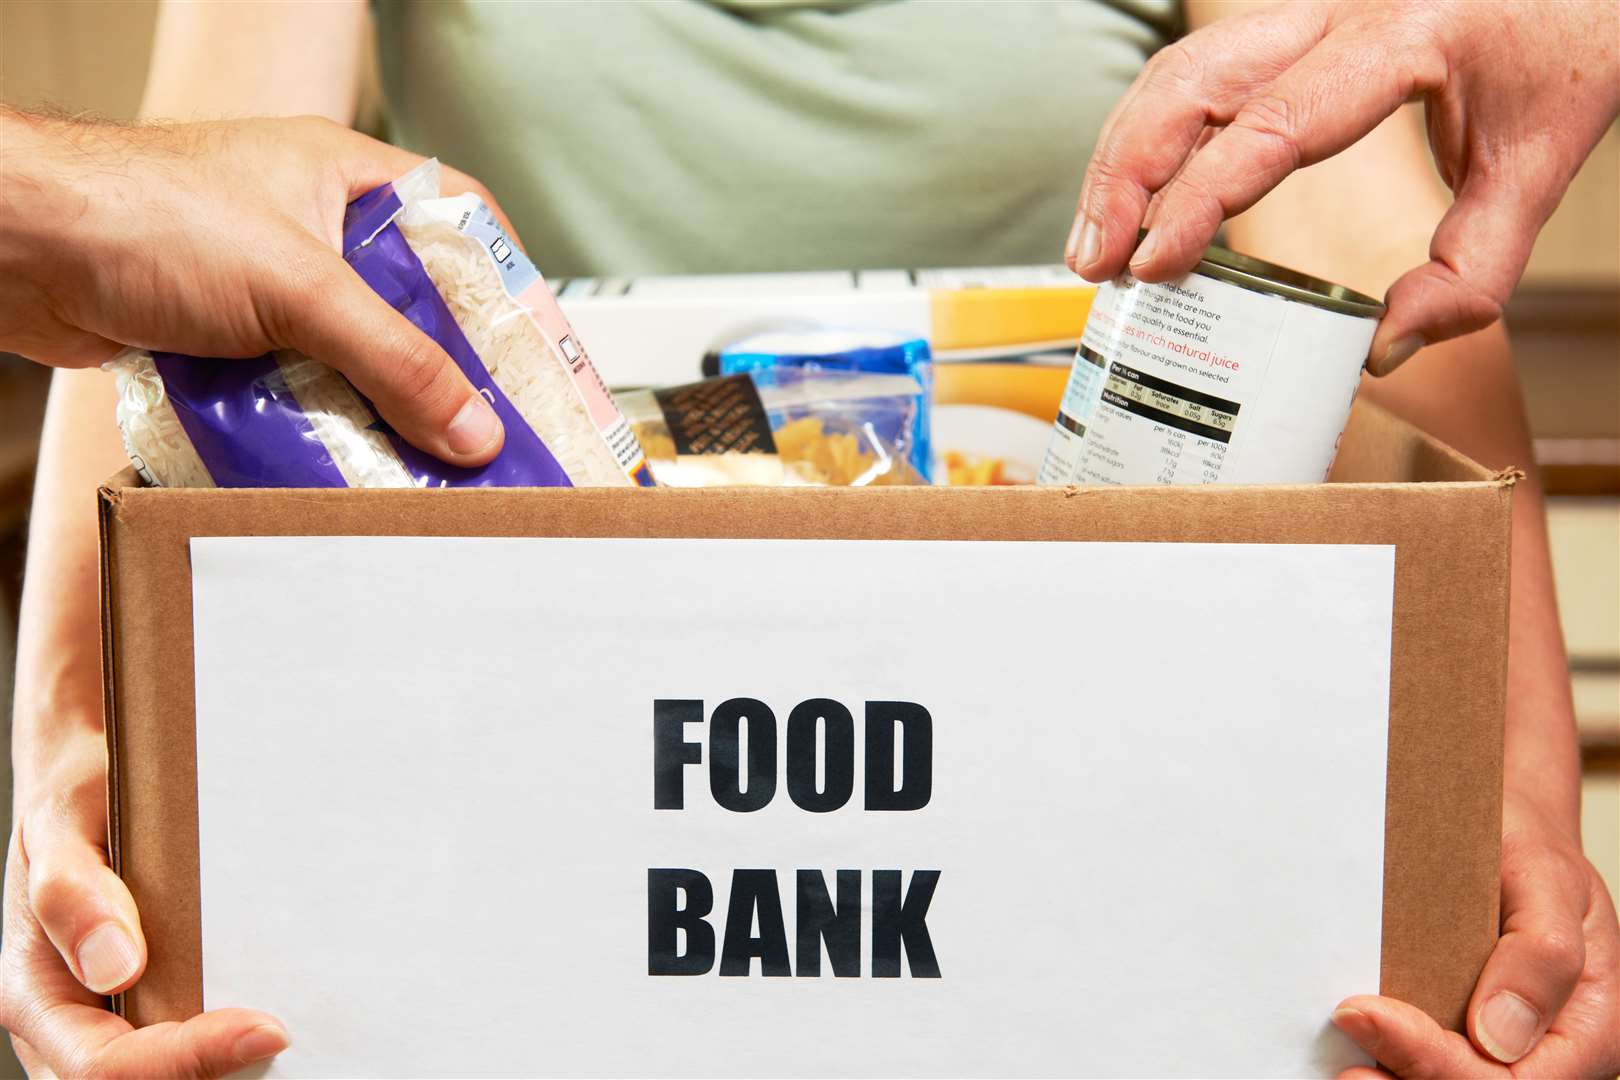 Banff and Buchan MSP Stewart Stevenson has encouraged people to keep helping local food banks.